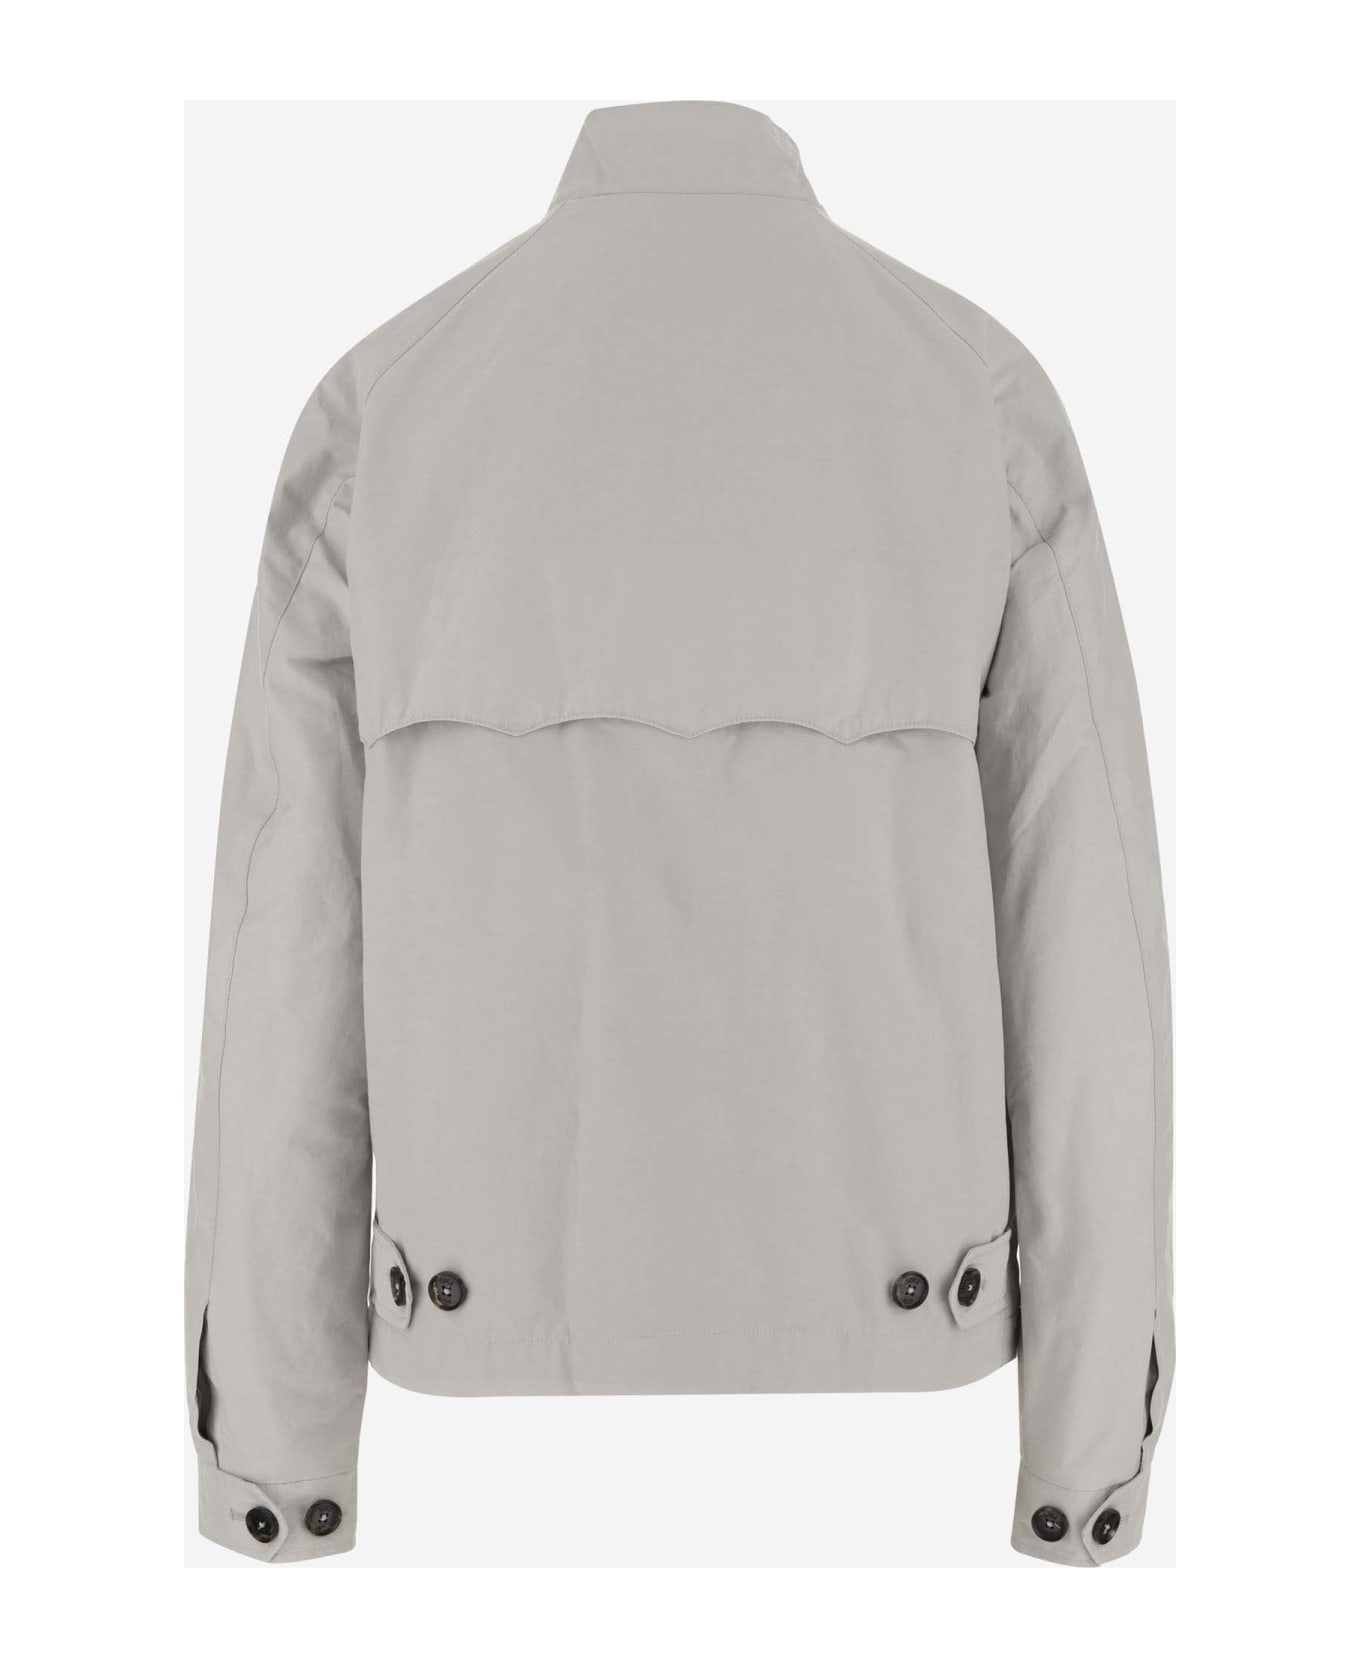 Baracuta Technical Fabric Jacket - Grey